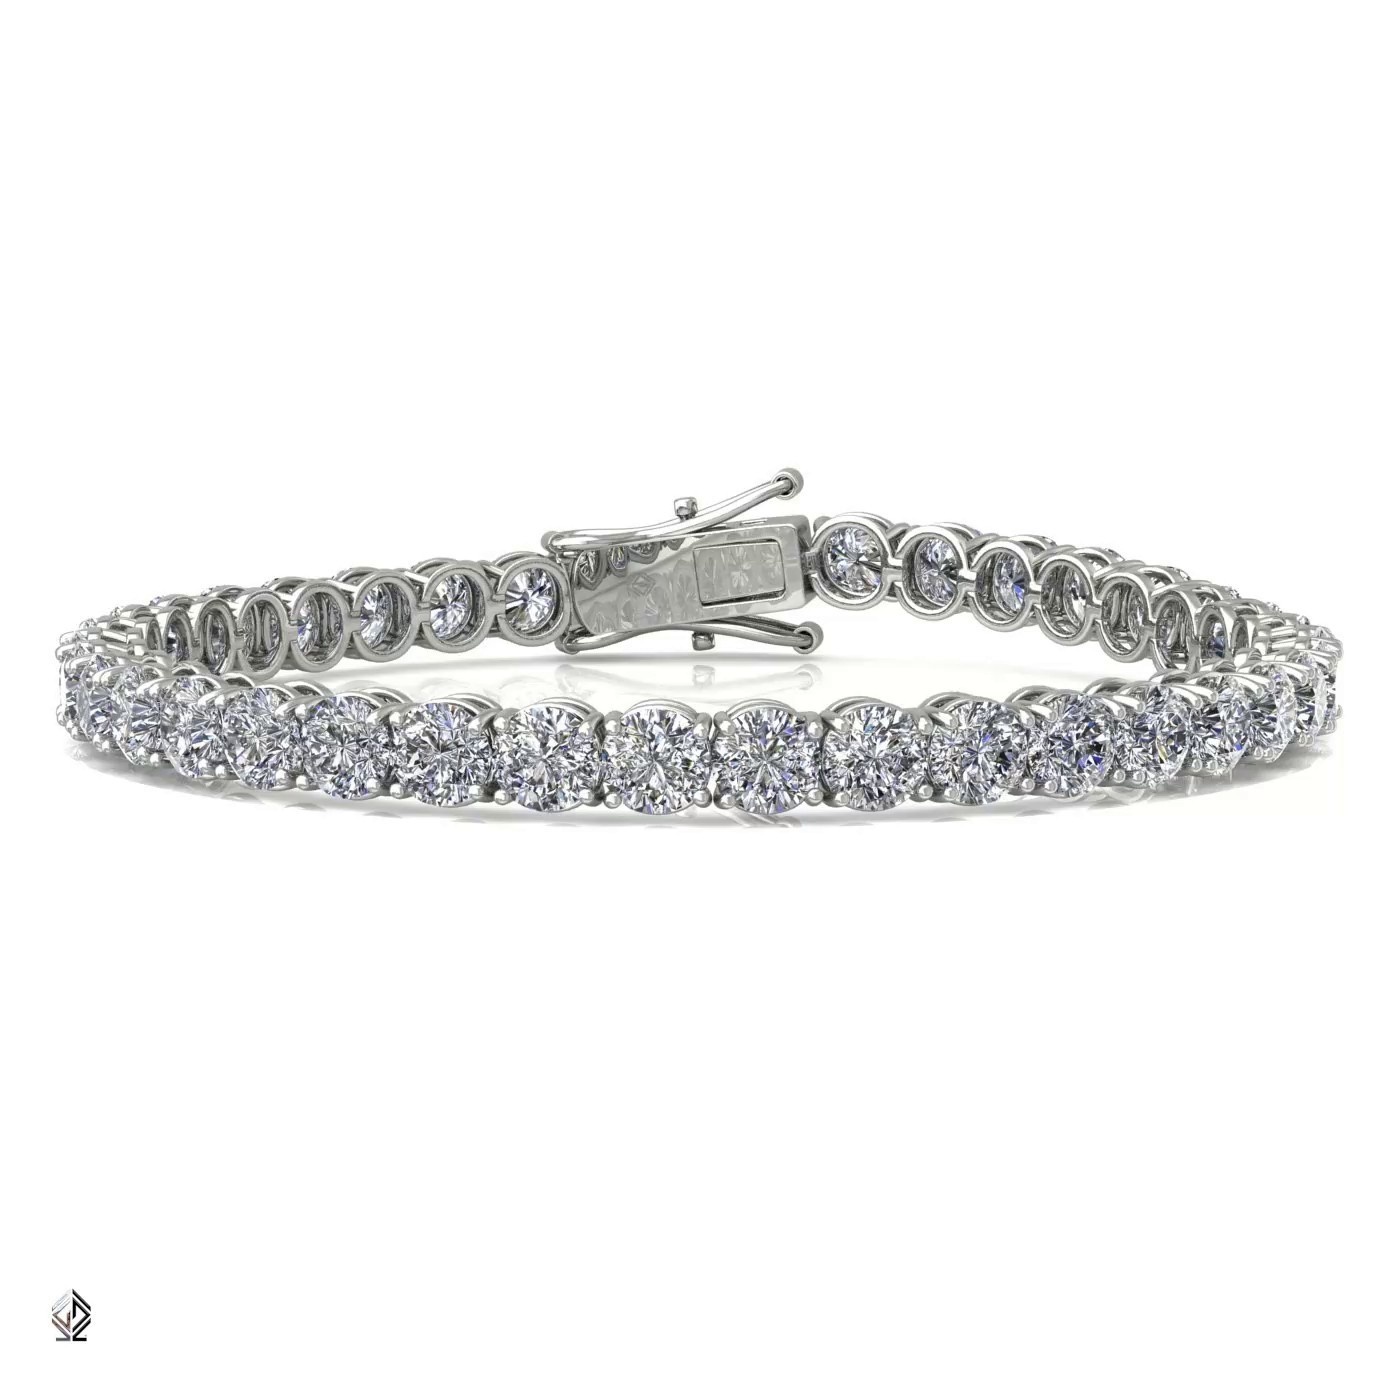 18k white gold 2.0mm 4 prong round shape diamond tennis bracelet in round setting Photos & images